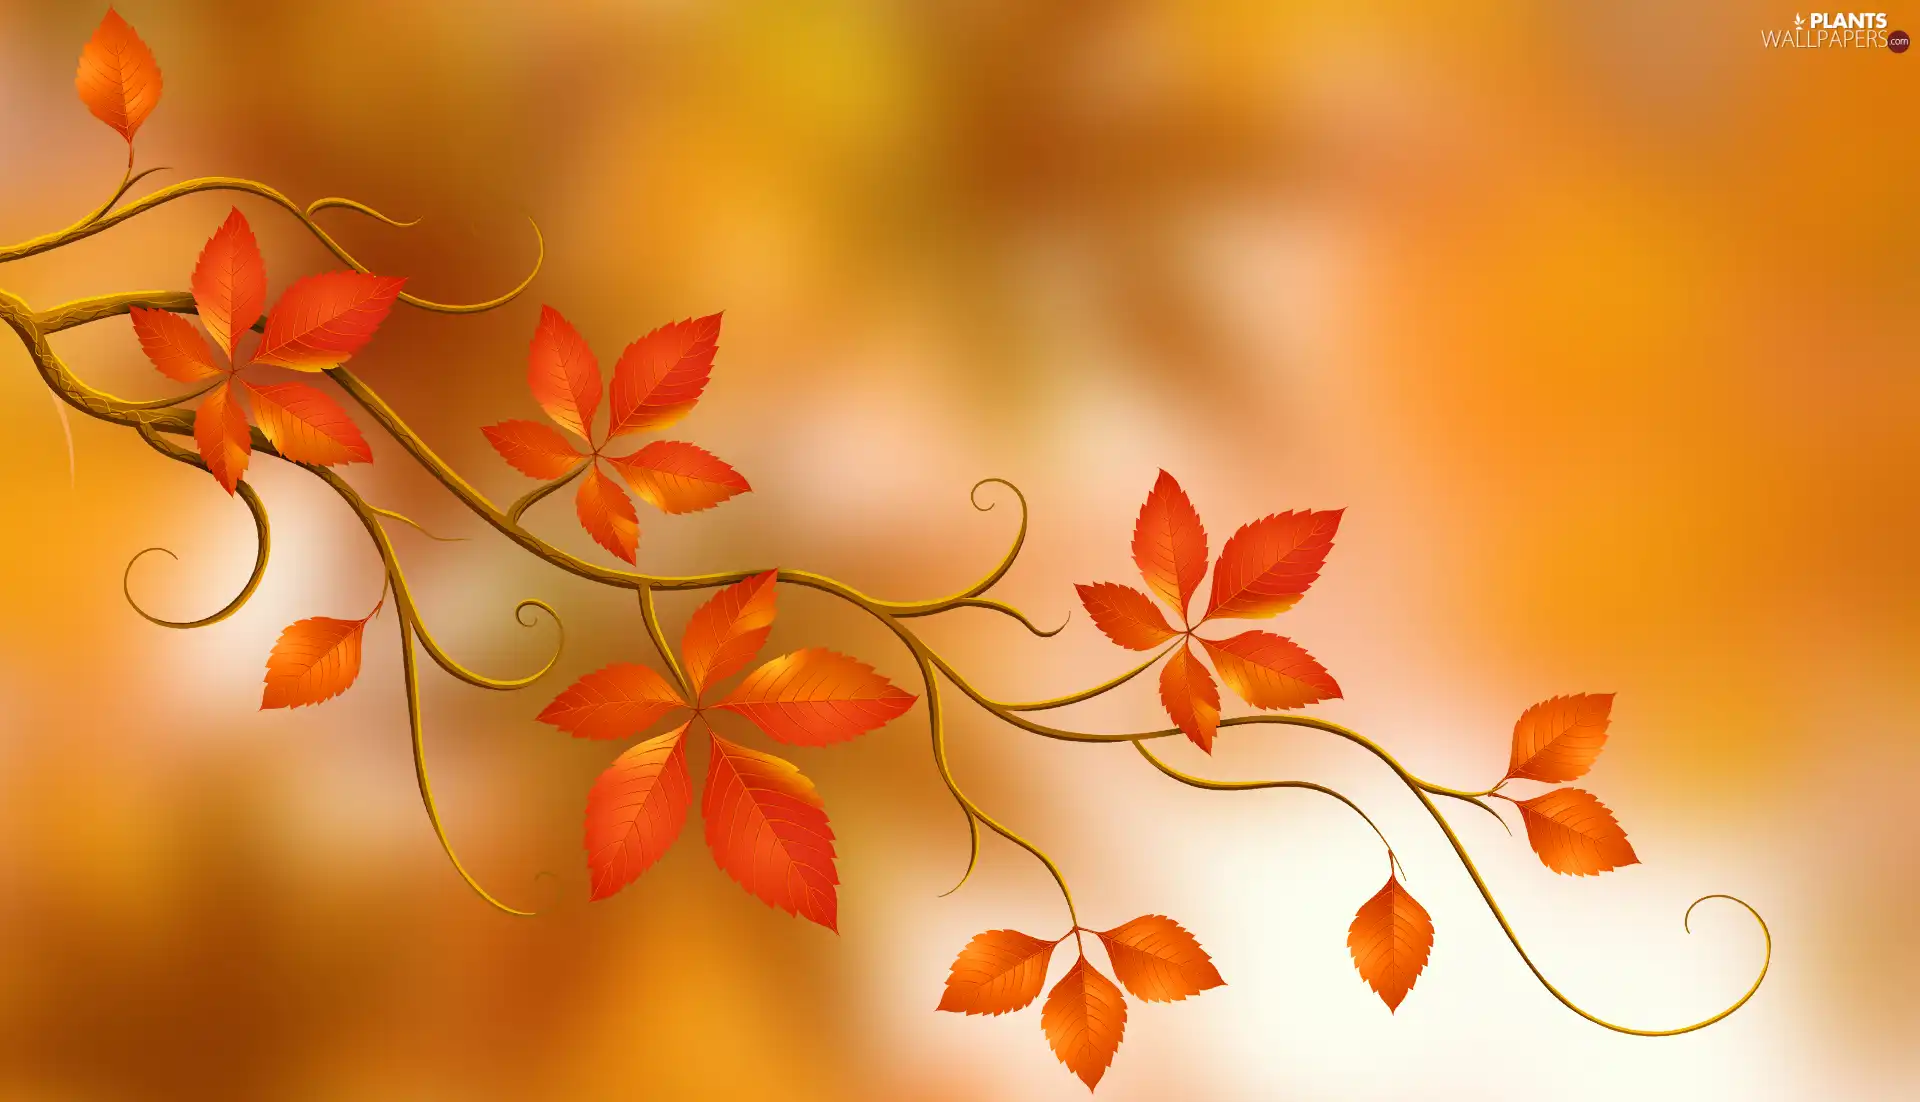 blurry background, 2D Graphics, Leaf